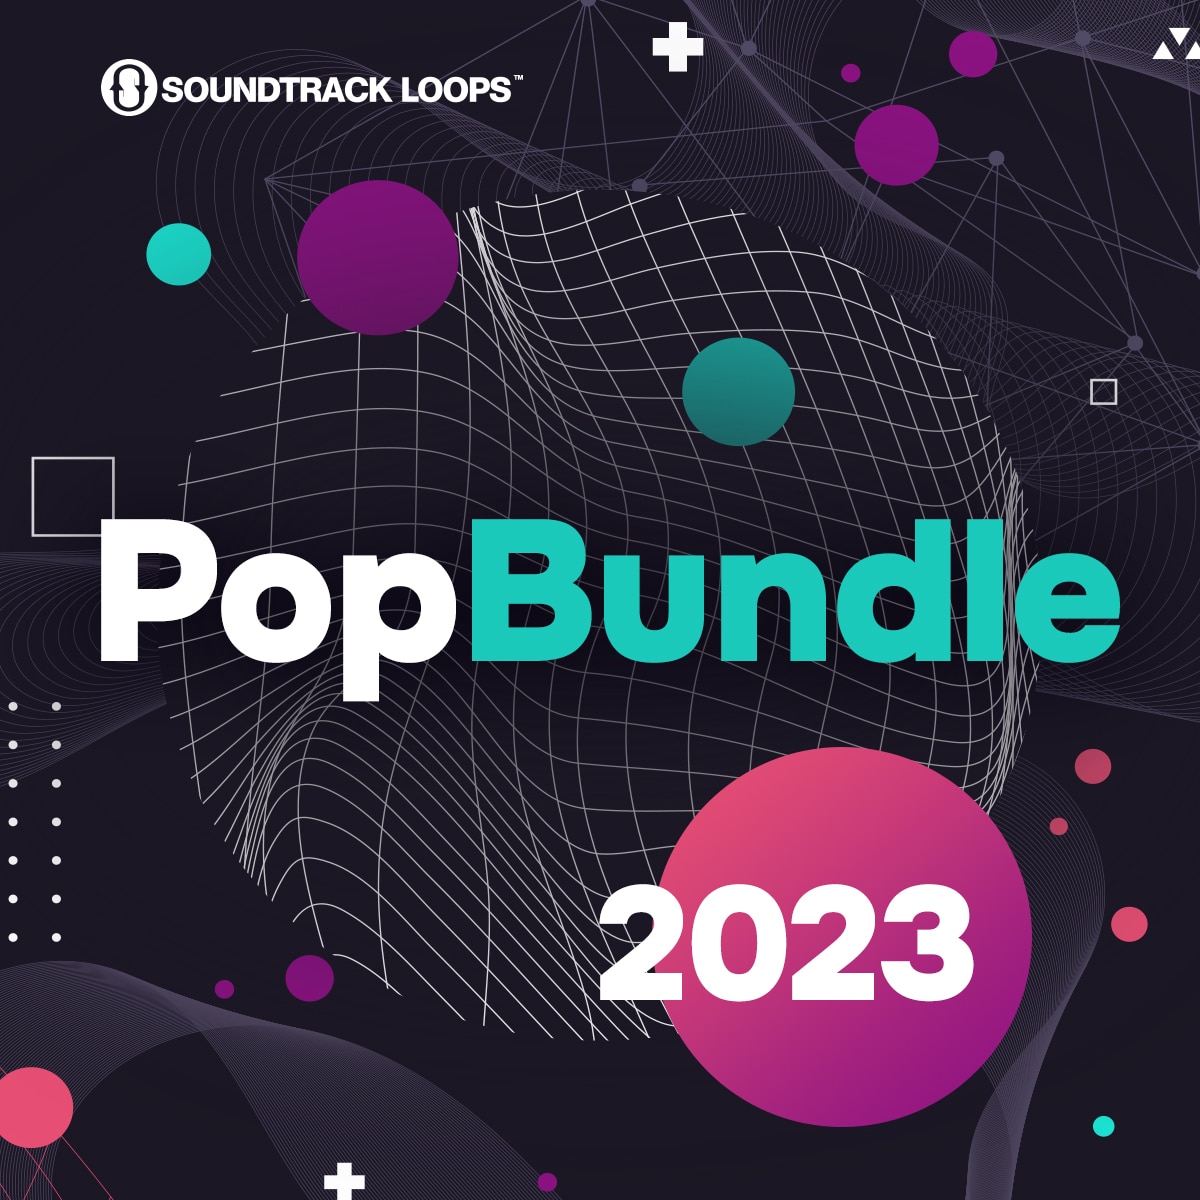 95% off “Pop Bundle 2023” by Soundtrack Loops